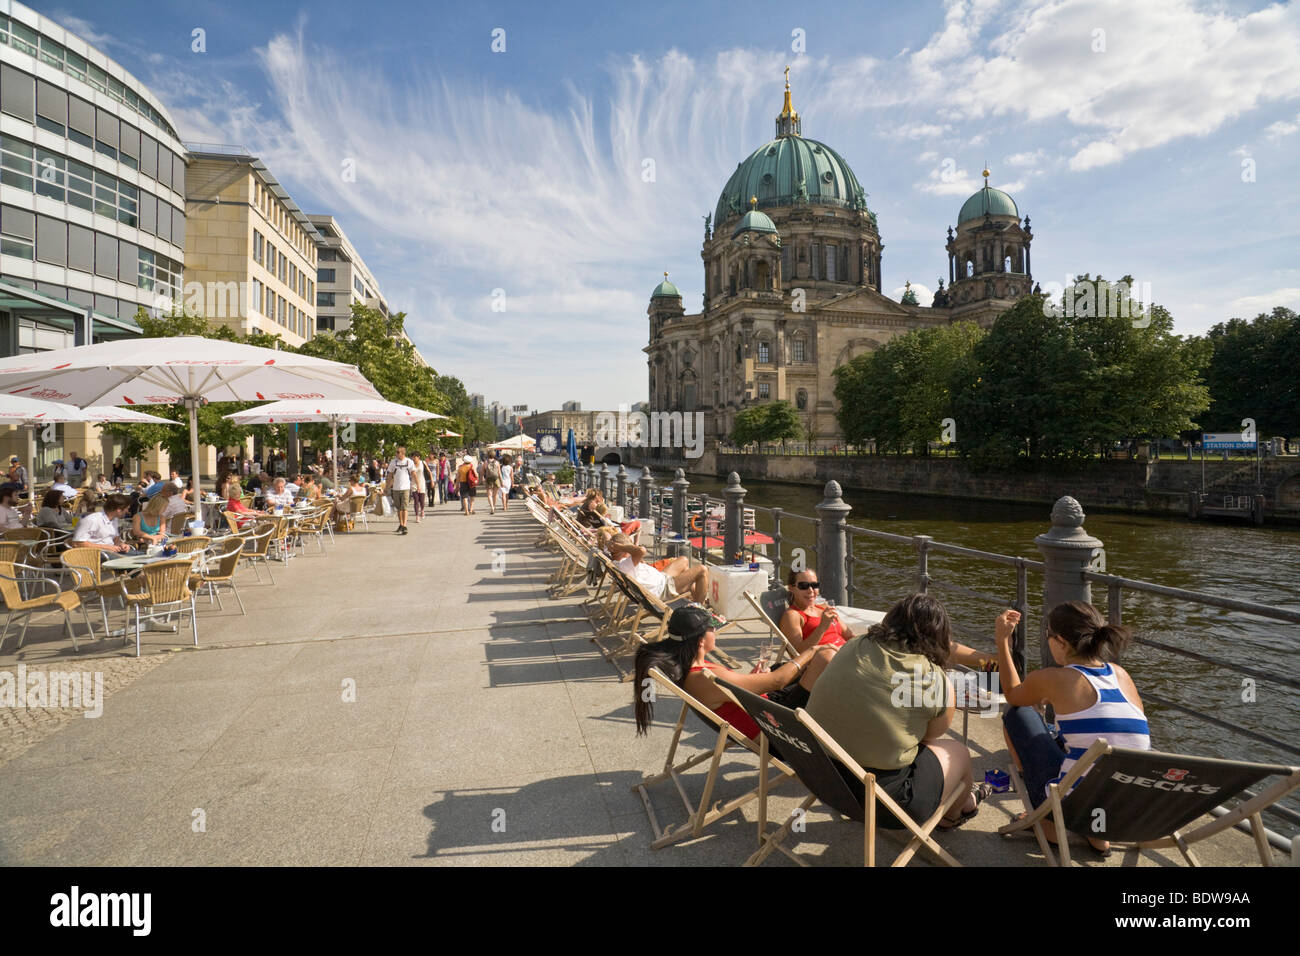 Berliner kuppel -Fotos und -Bildmaterial in hoher Auflösung – Alamy